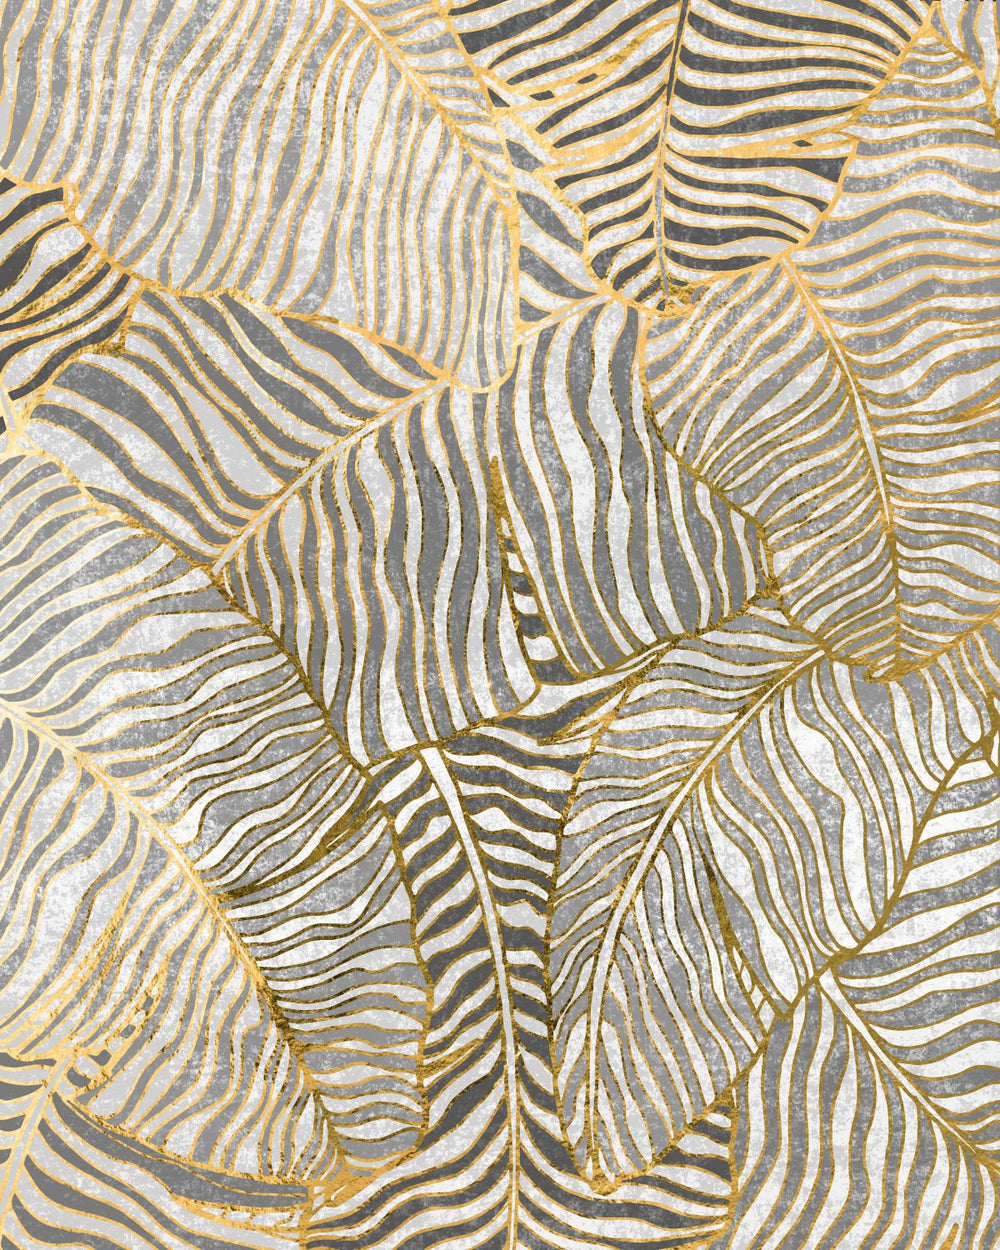 Striped Banana Leaves